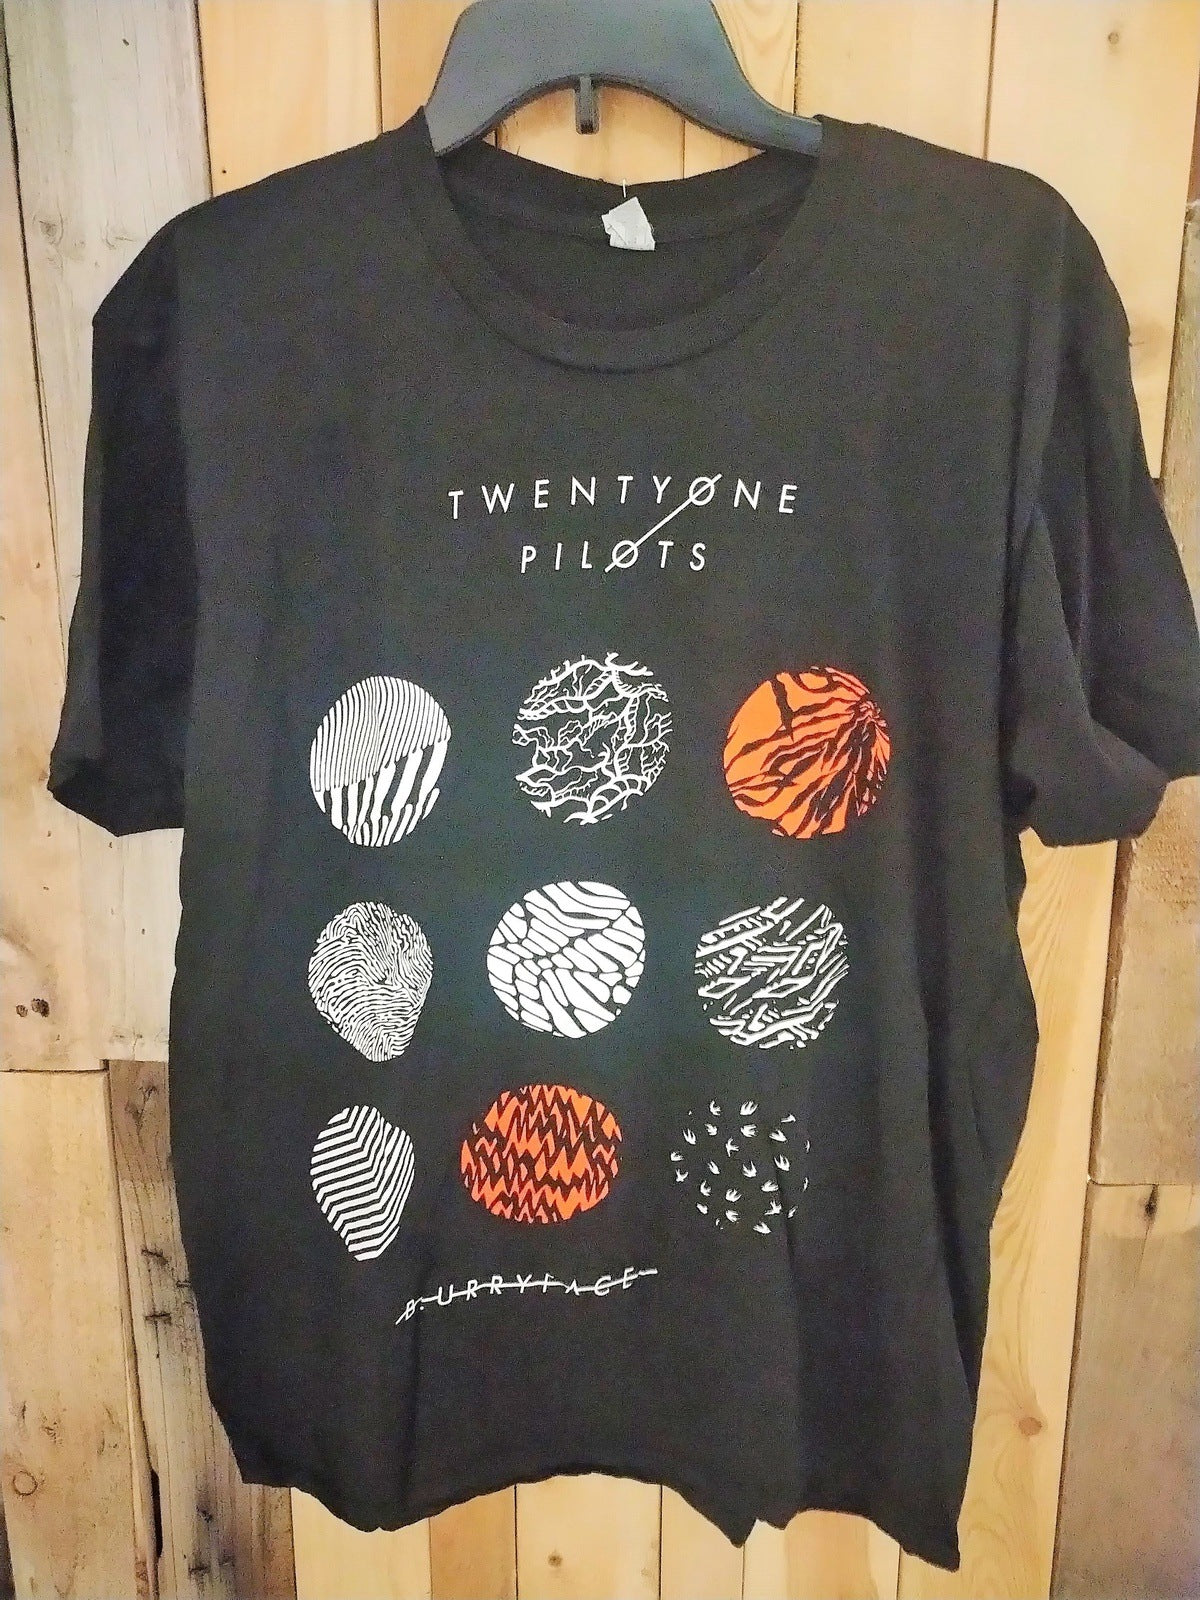 Twenty One Pilots "Blurry Face" Women's Large T Shirt 101031WH